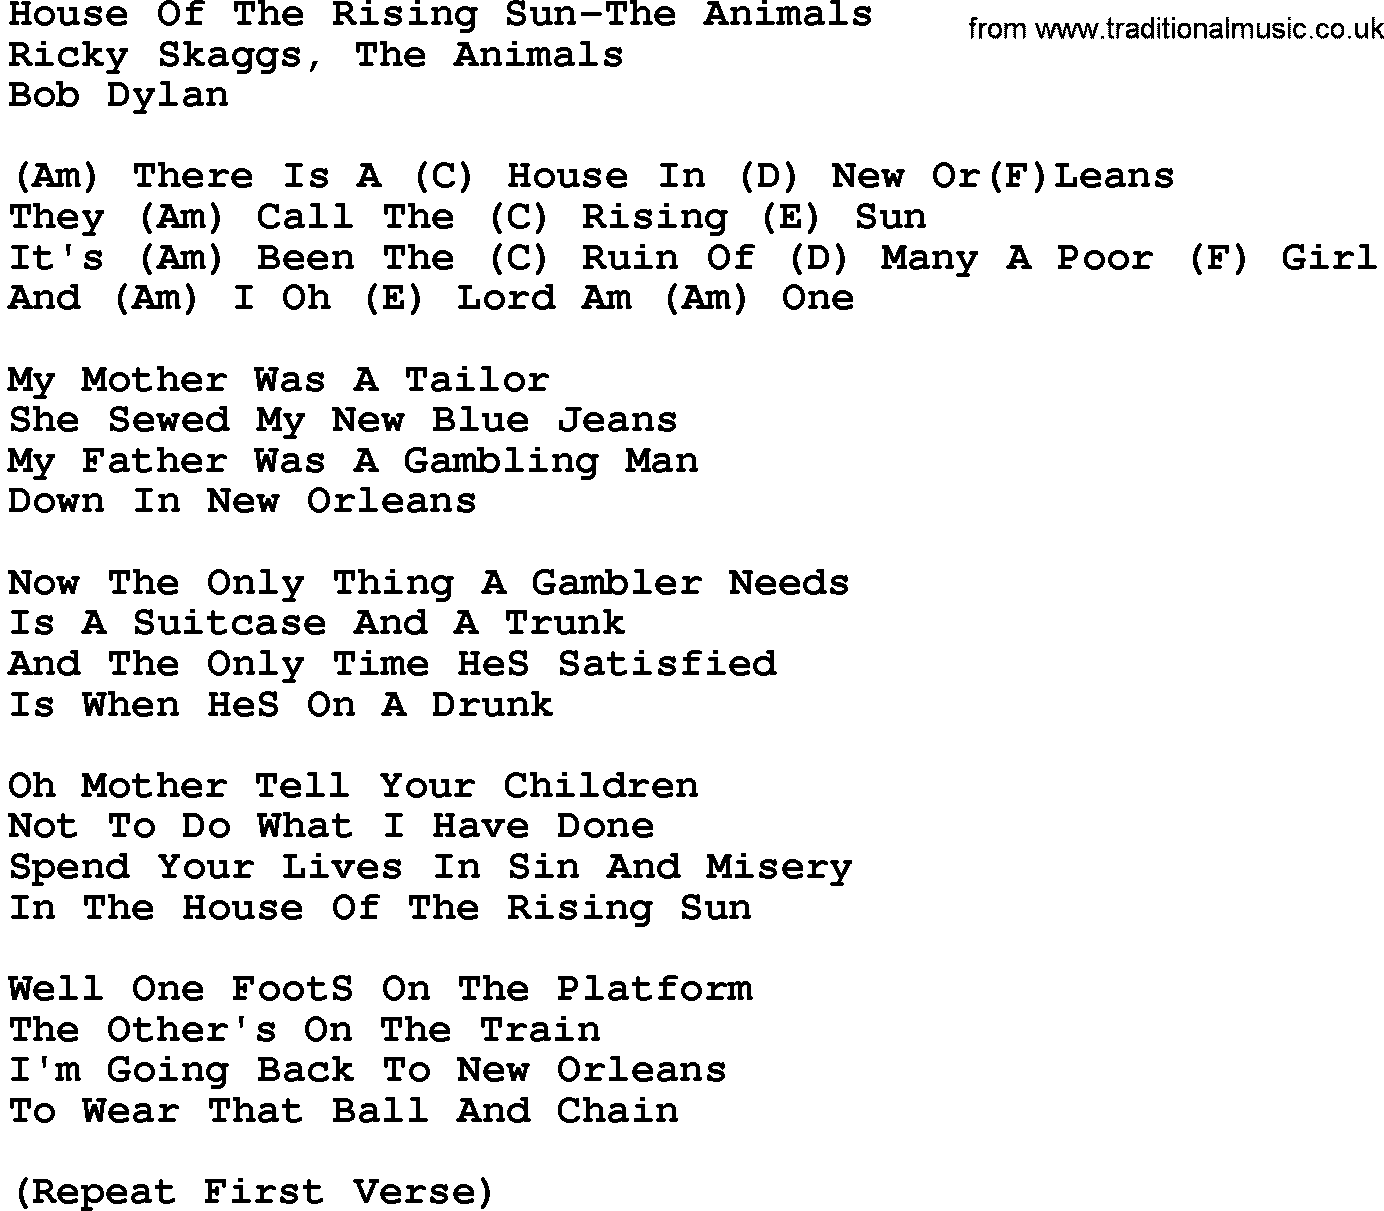 The Animals - House of the Rising Sun (lyrics) 